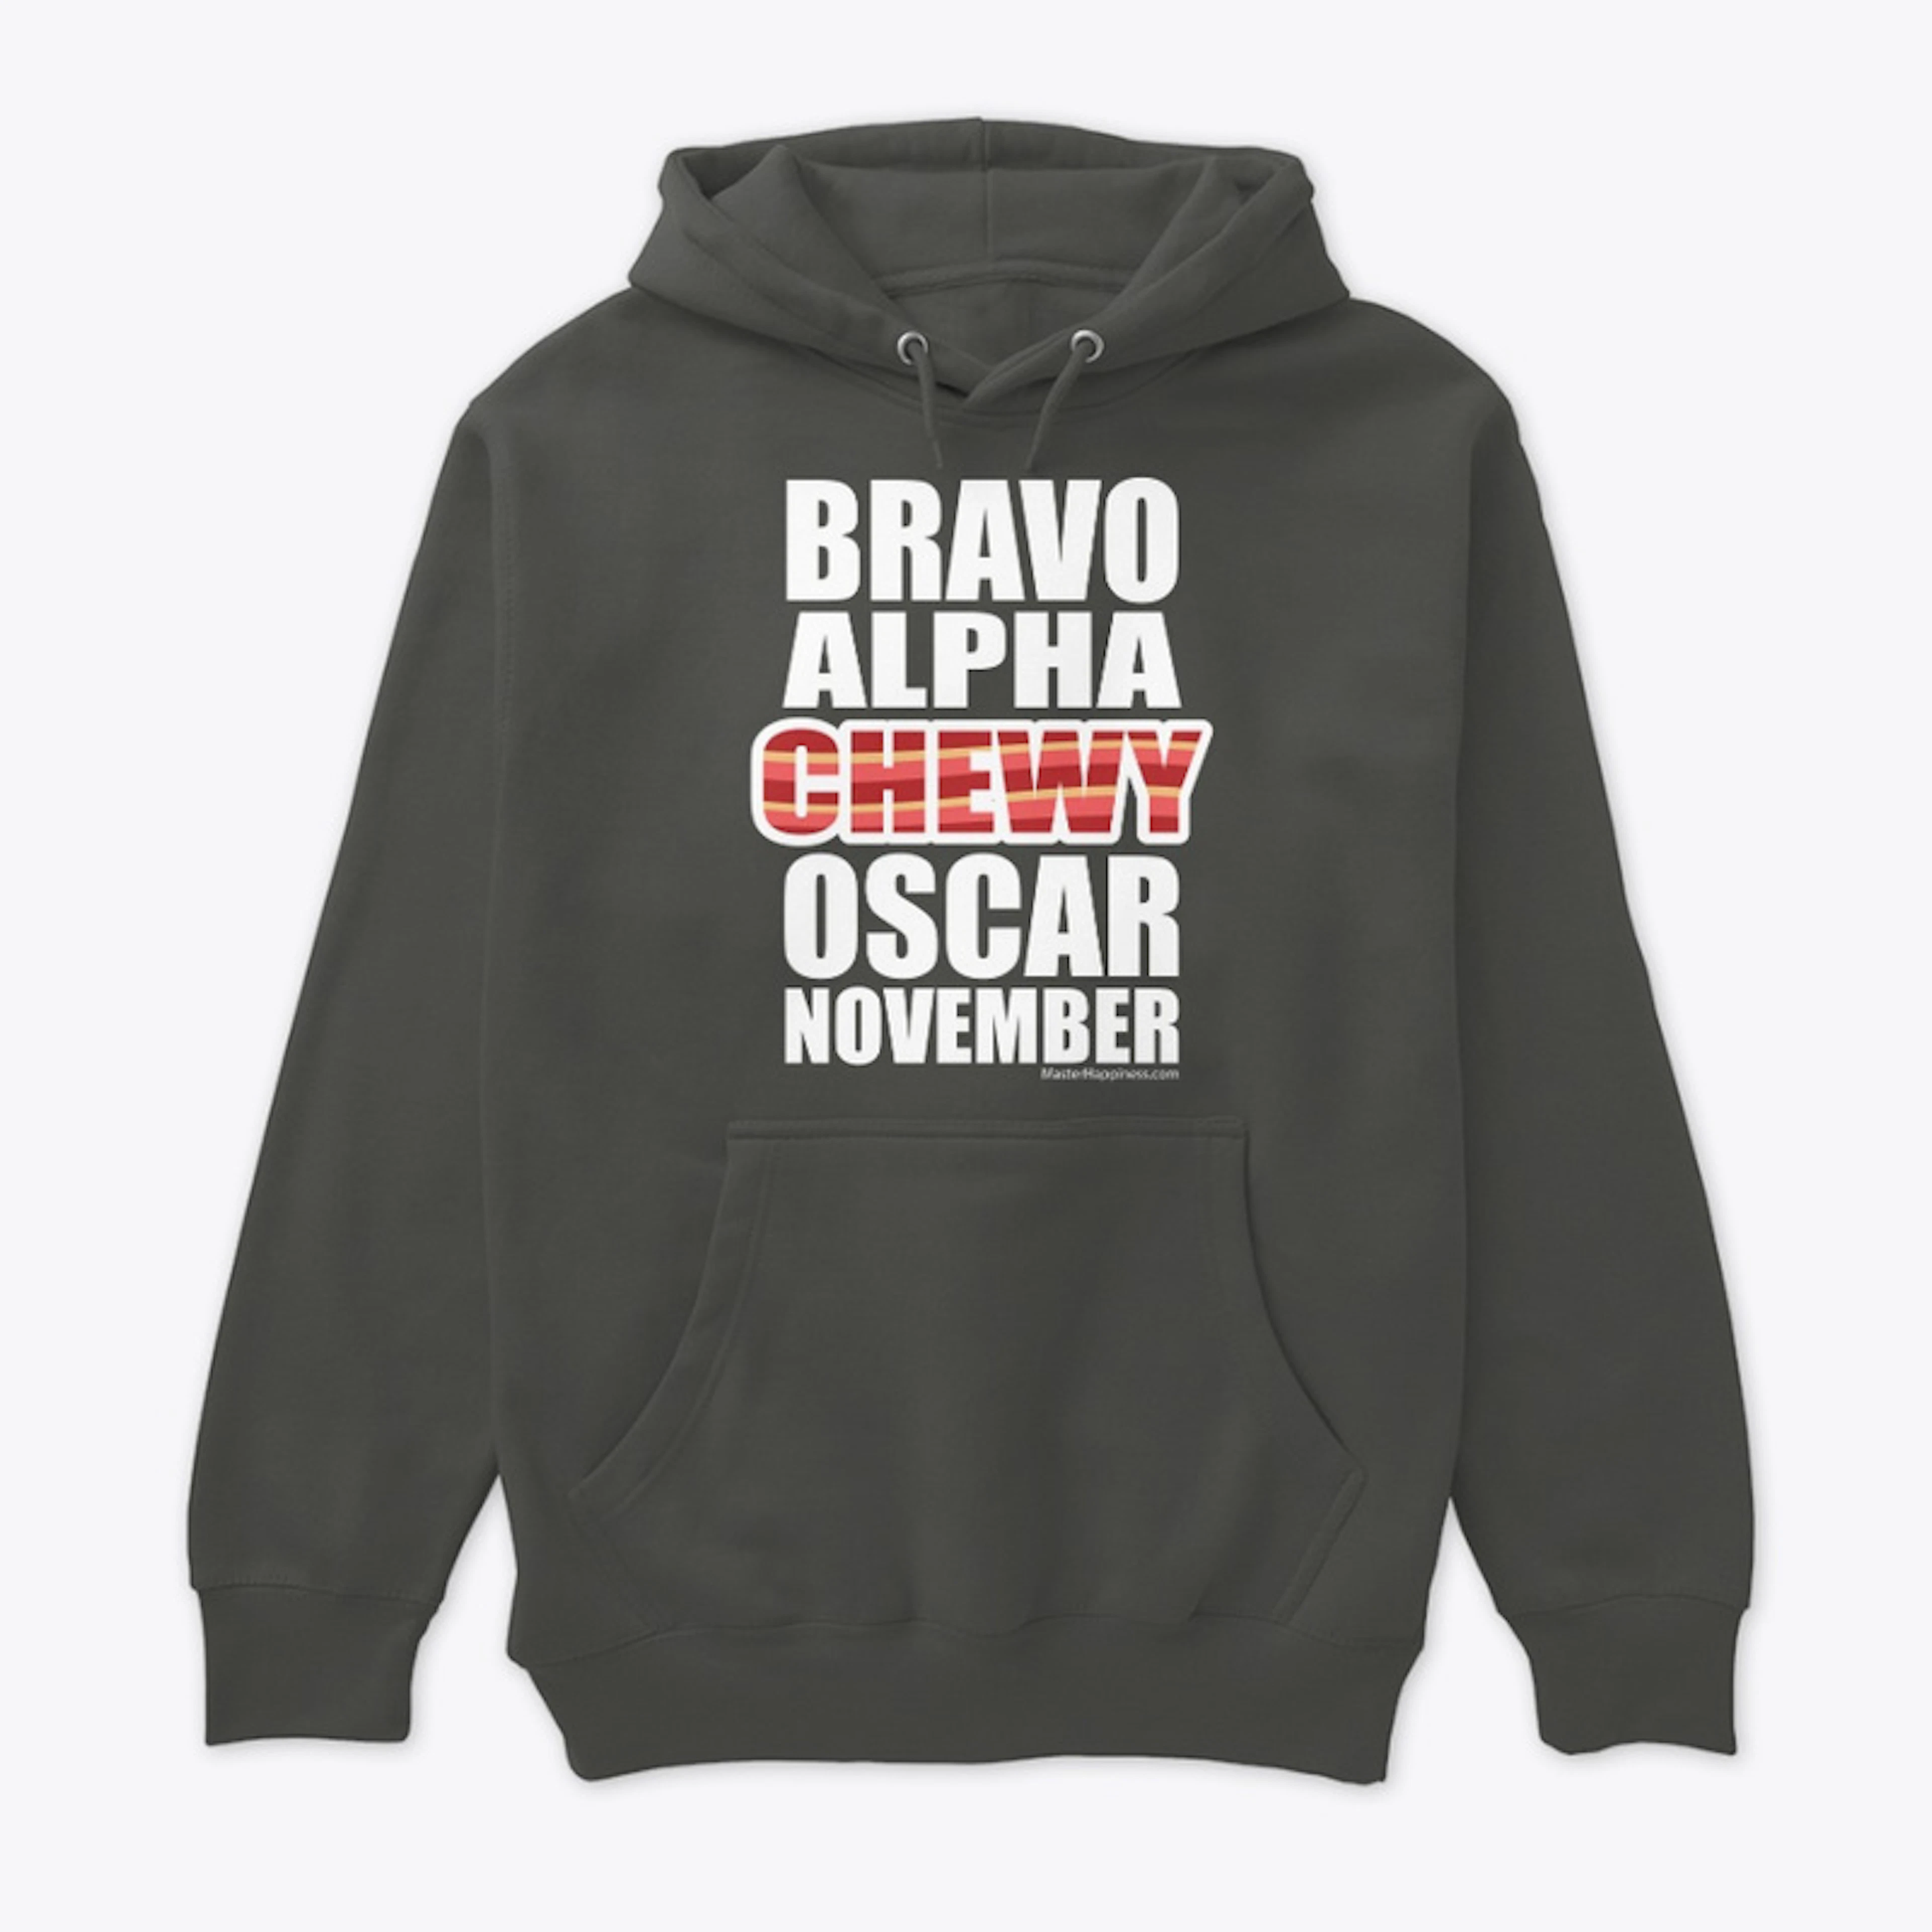 Bravo, Alpha, CHEWY, Oscar, November